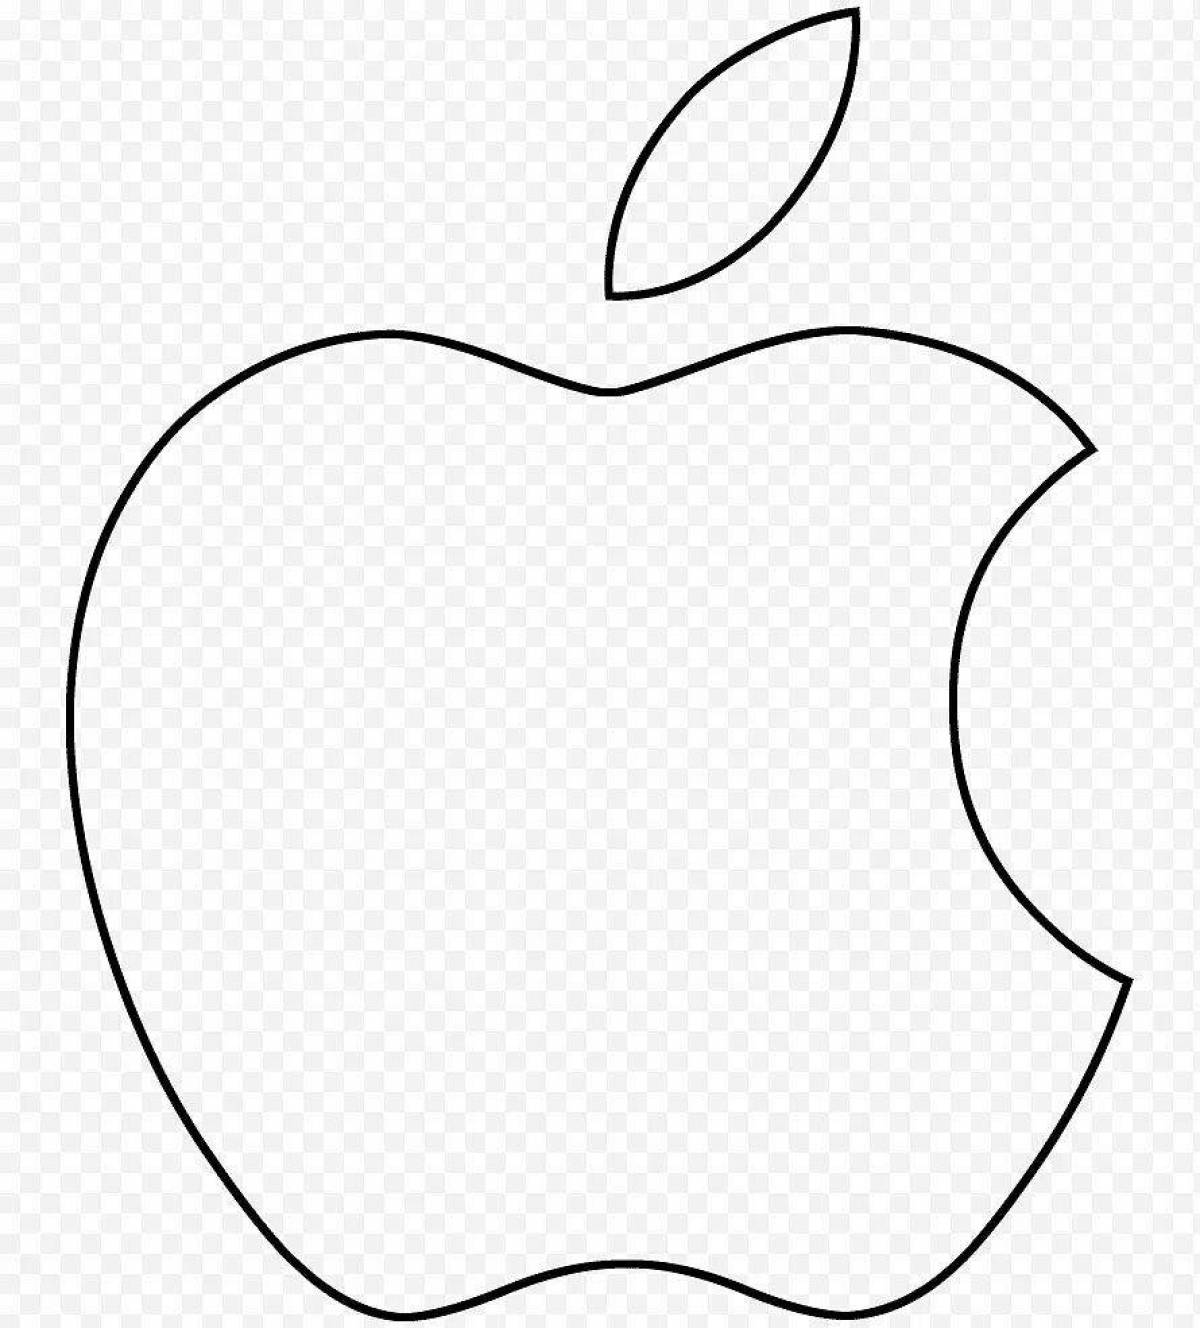 Fun apple icon coloring page